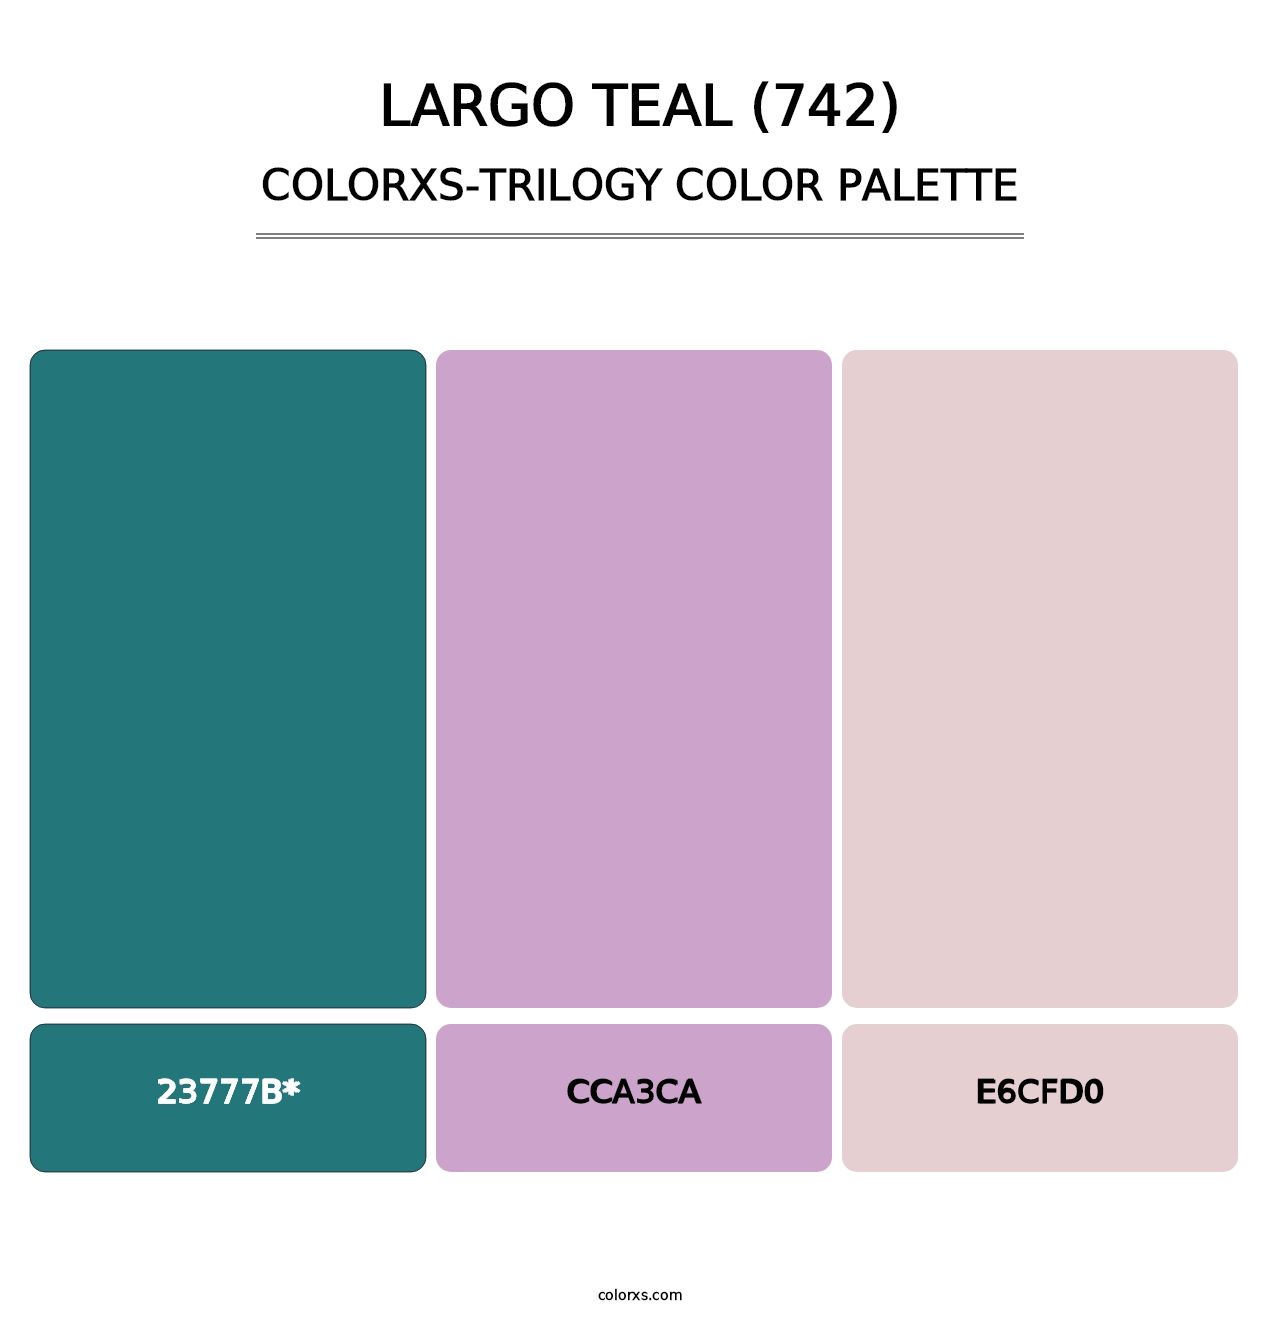 Largo Teal (742) - Colorxs Trilogy Palette